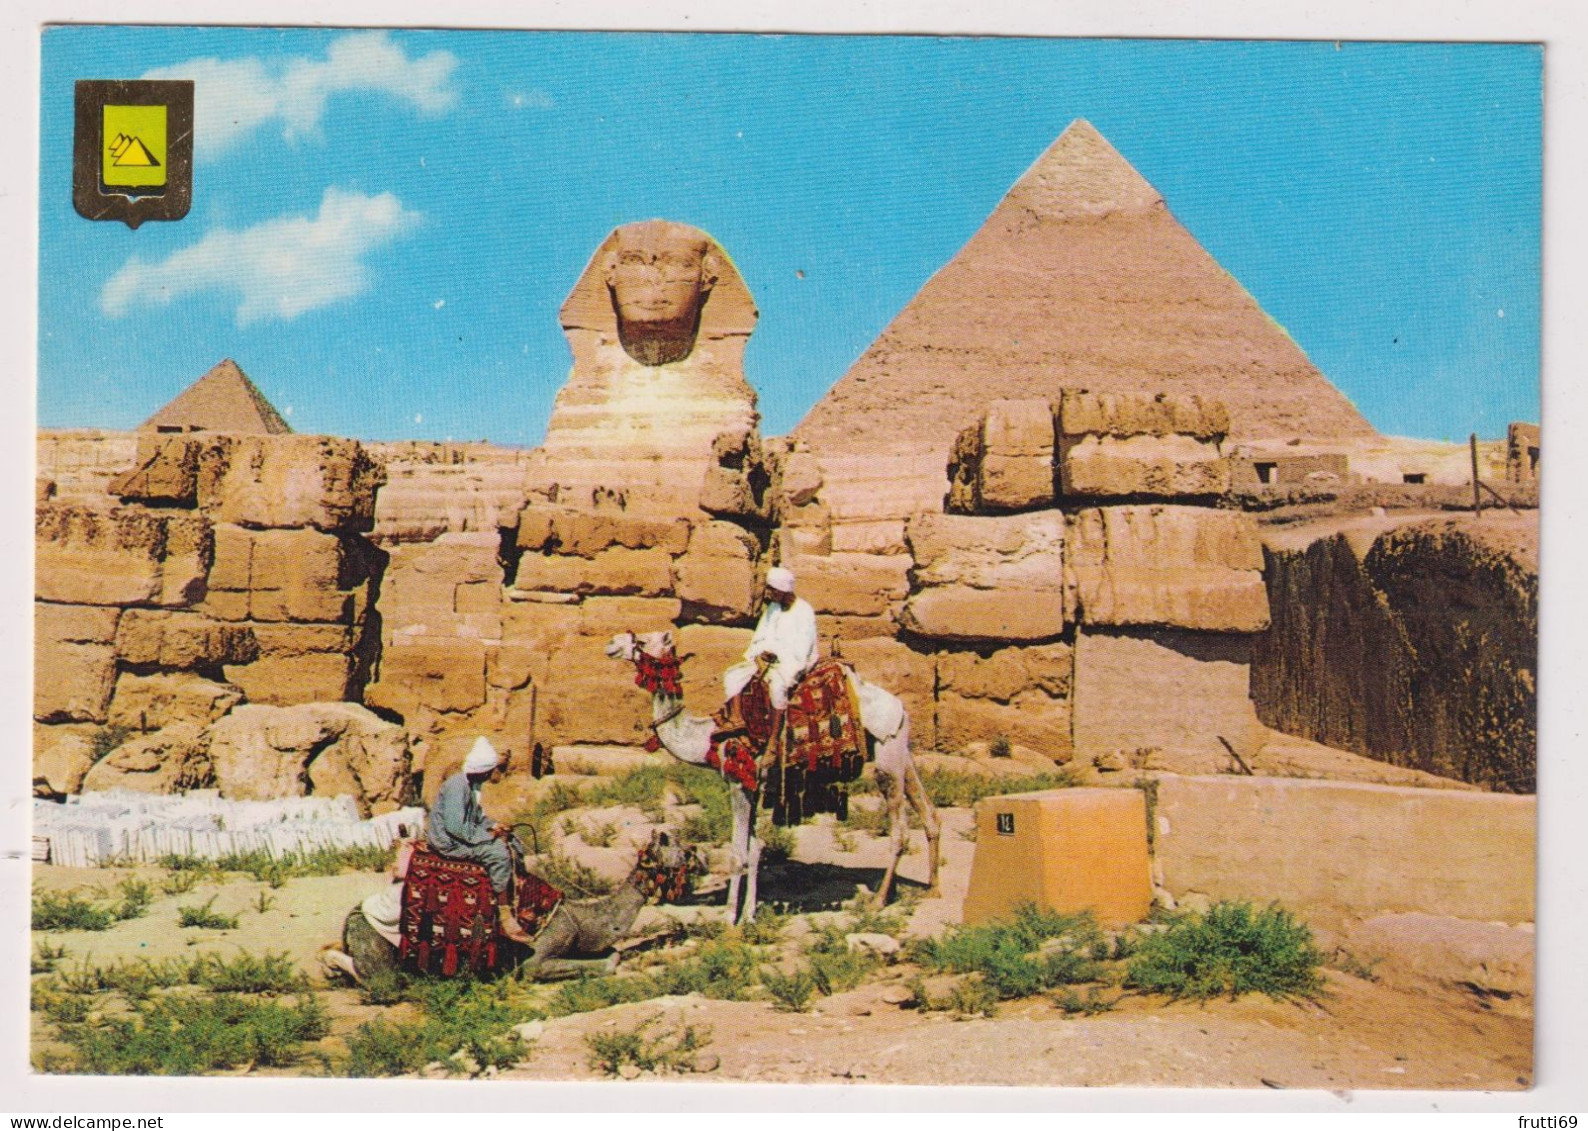 AK 198207  EGYPT - Giza - The Great Sphinx,  Kephren And The Mycerinos Pyramids - Piramidi